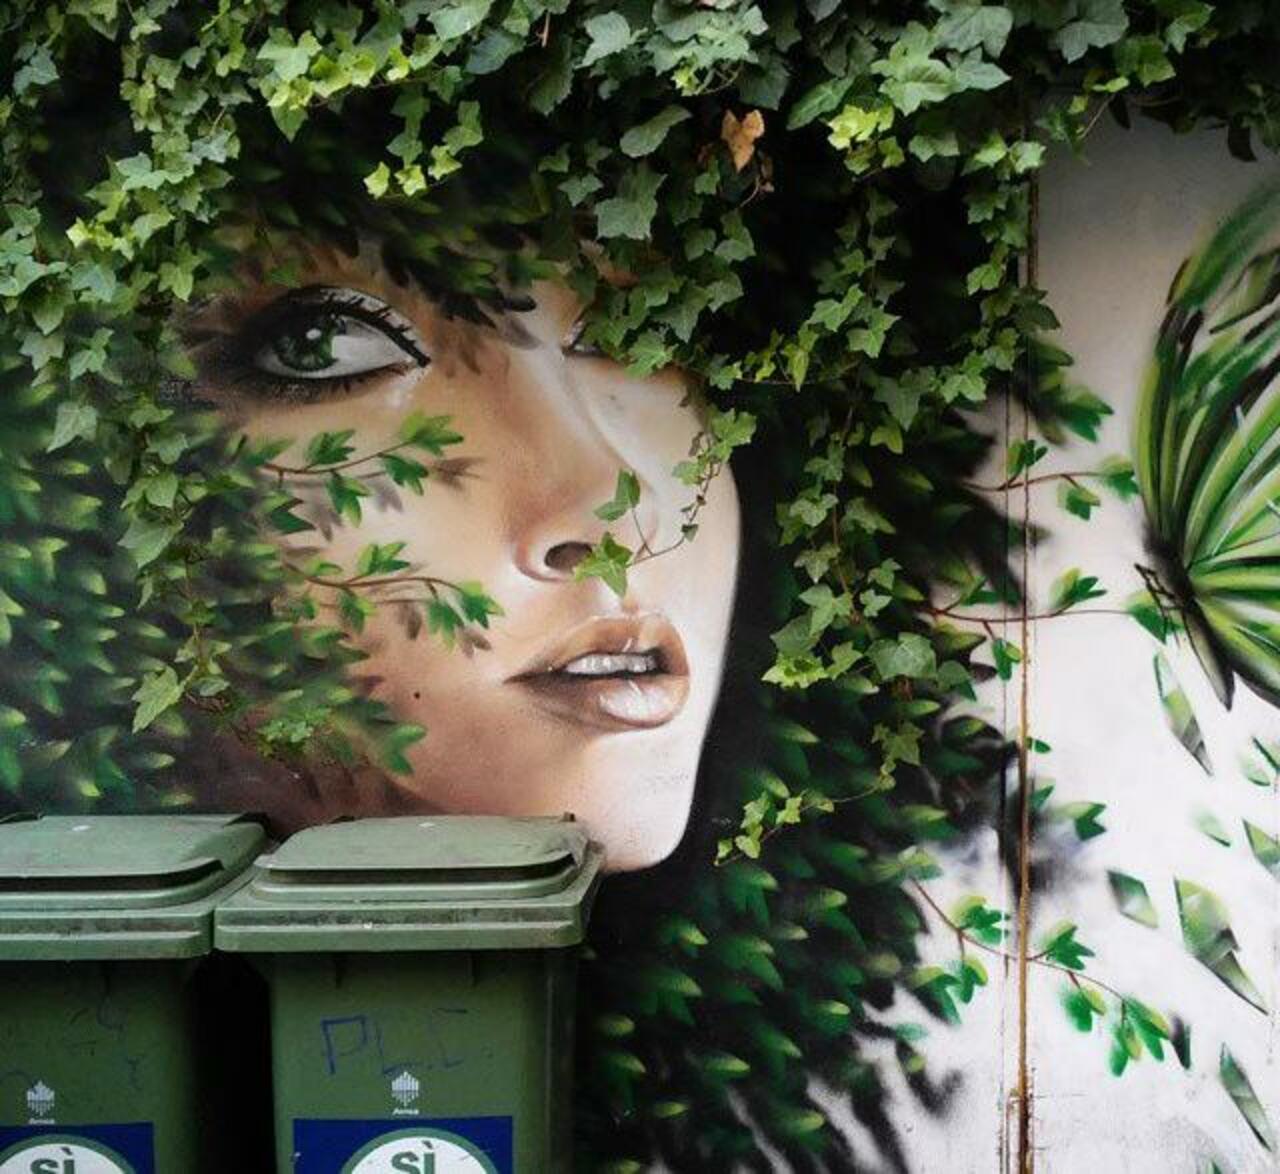 When Street Art meets nature by Dasxa in Isola, Millan 

#art #arte #graffiti #streetart http://t.co/DcIM8tHKpy